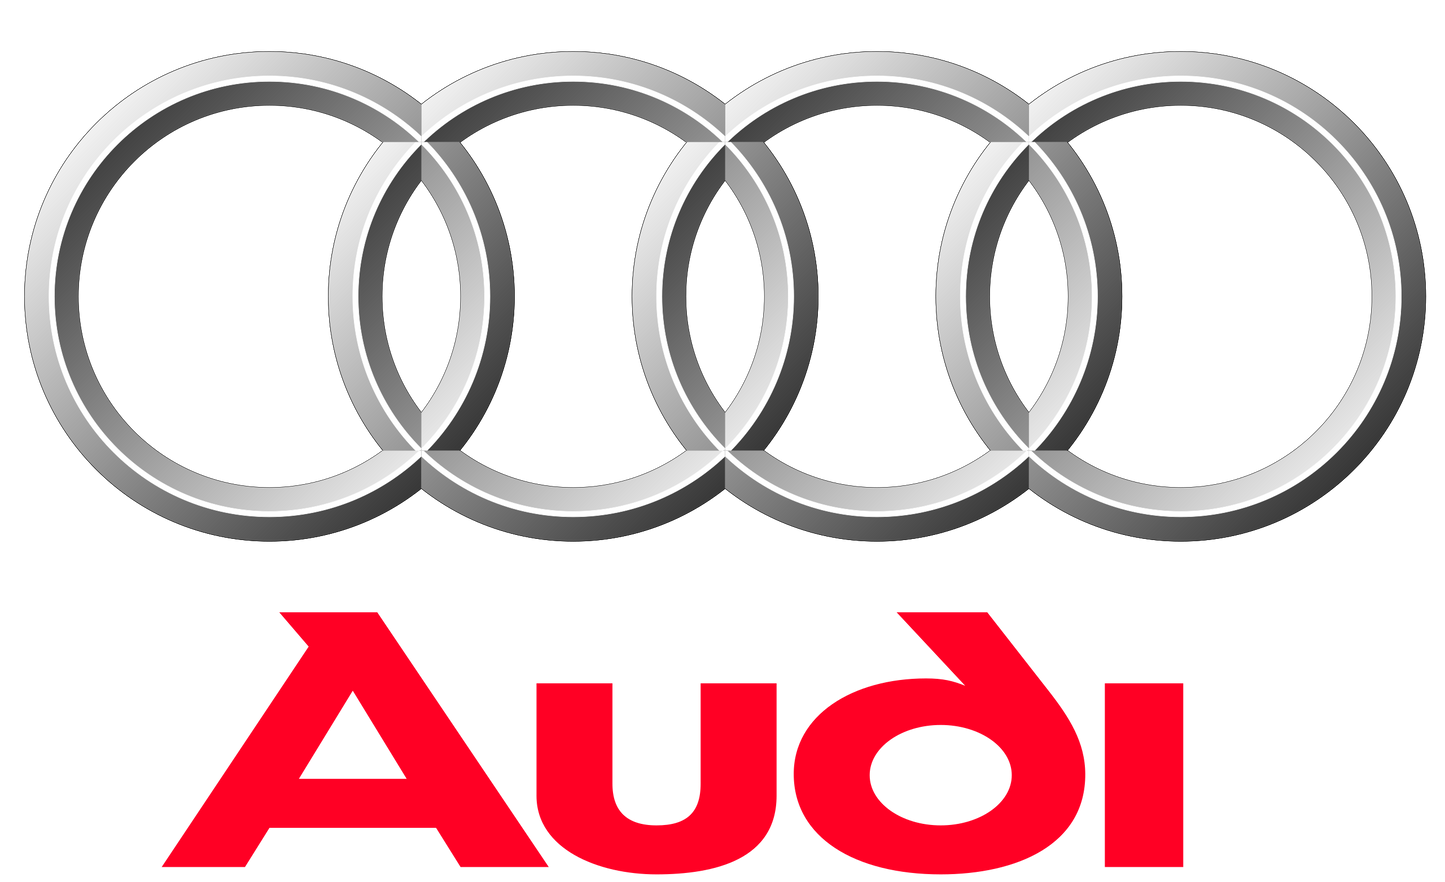 Kod radia samochodowego Audi Chorus